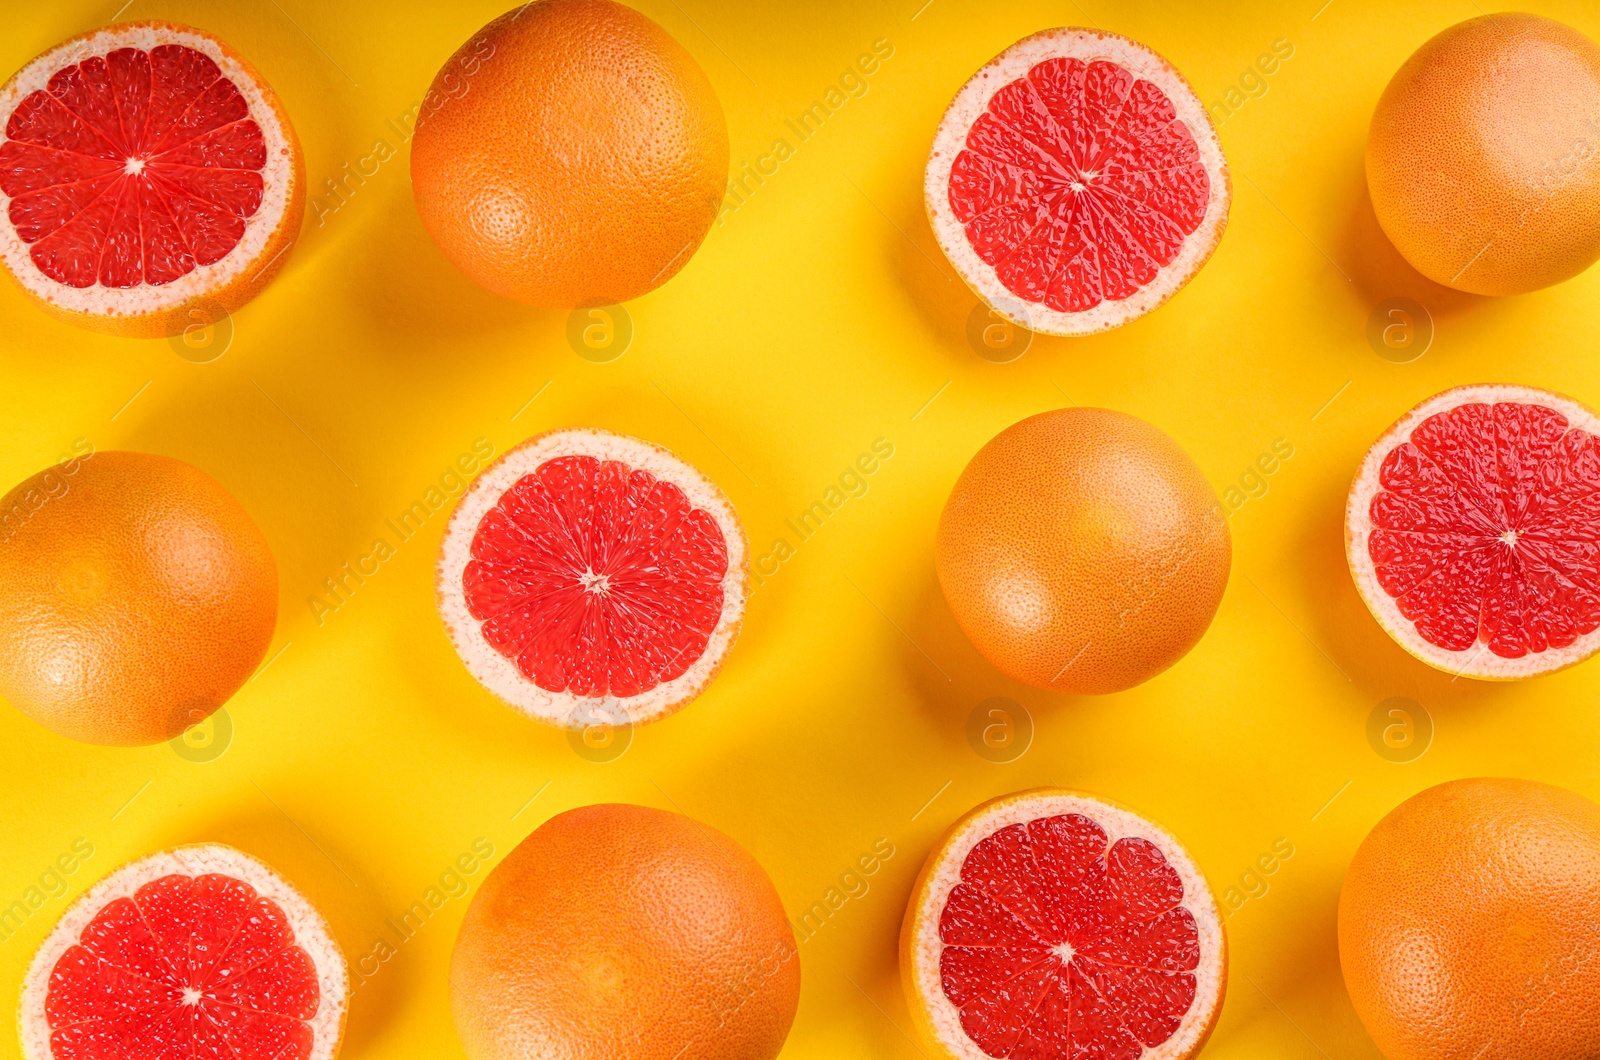 Photo of Cut and whole ripe grapefruits on yellow background, flat lay